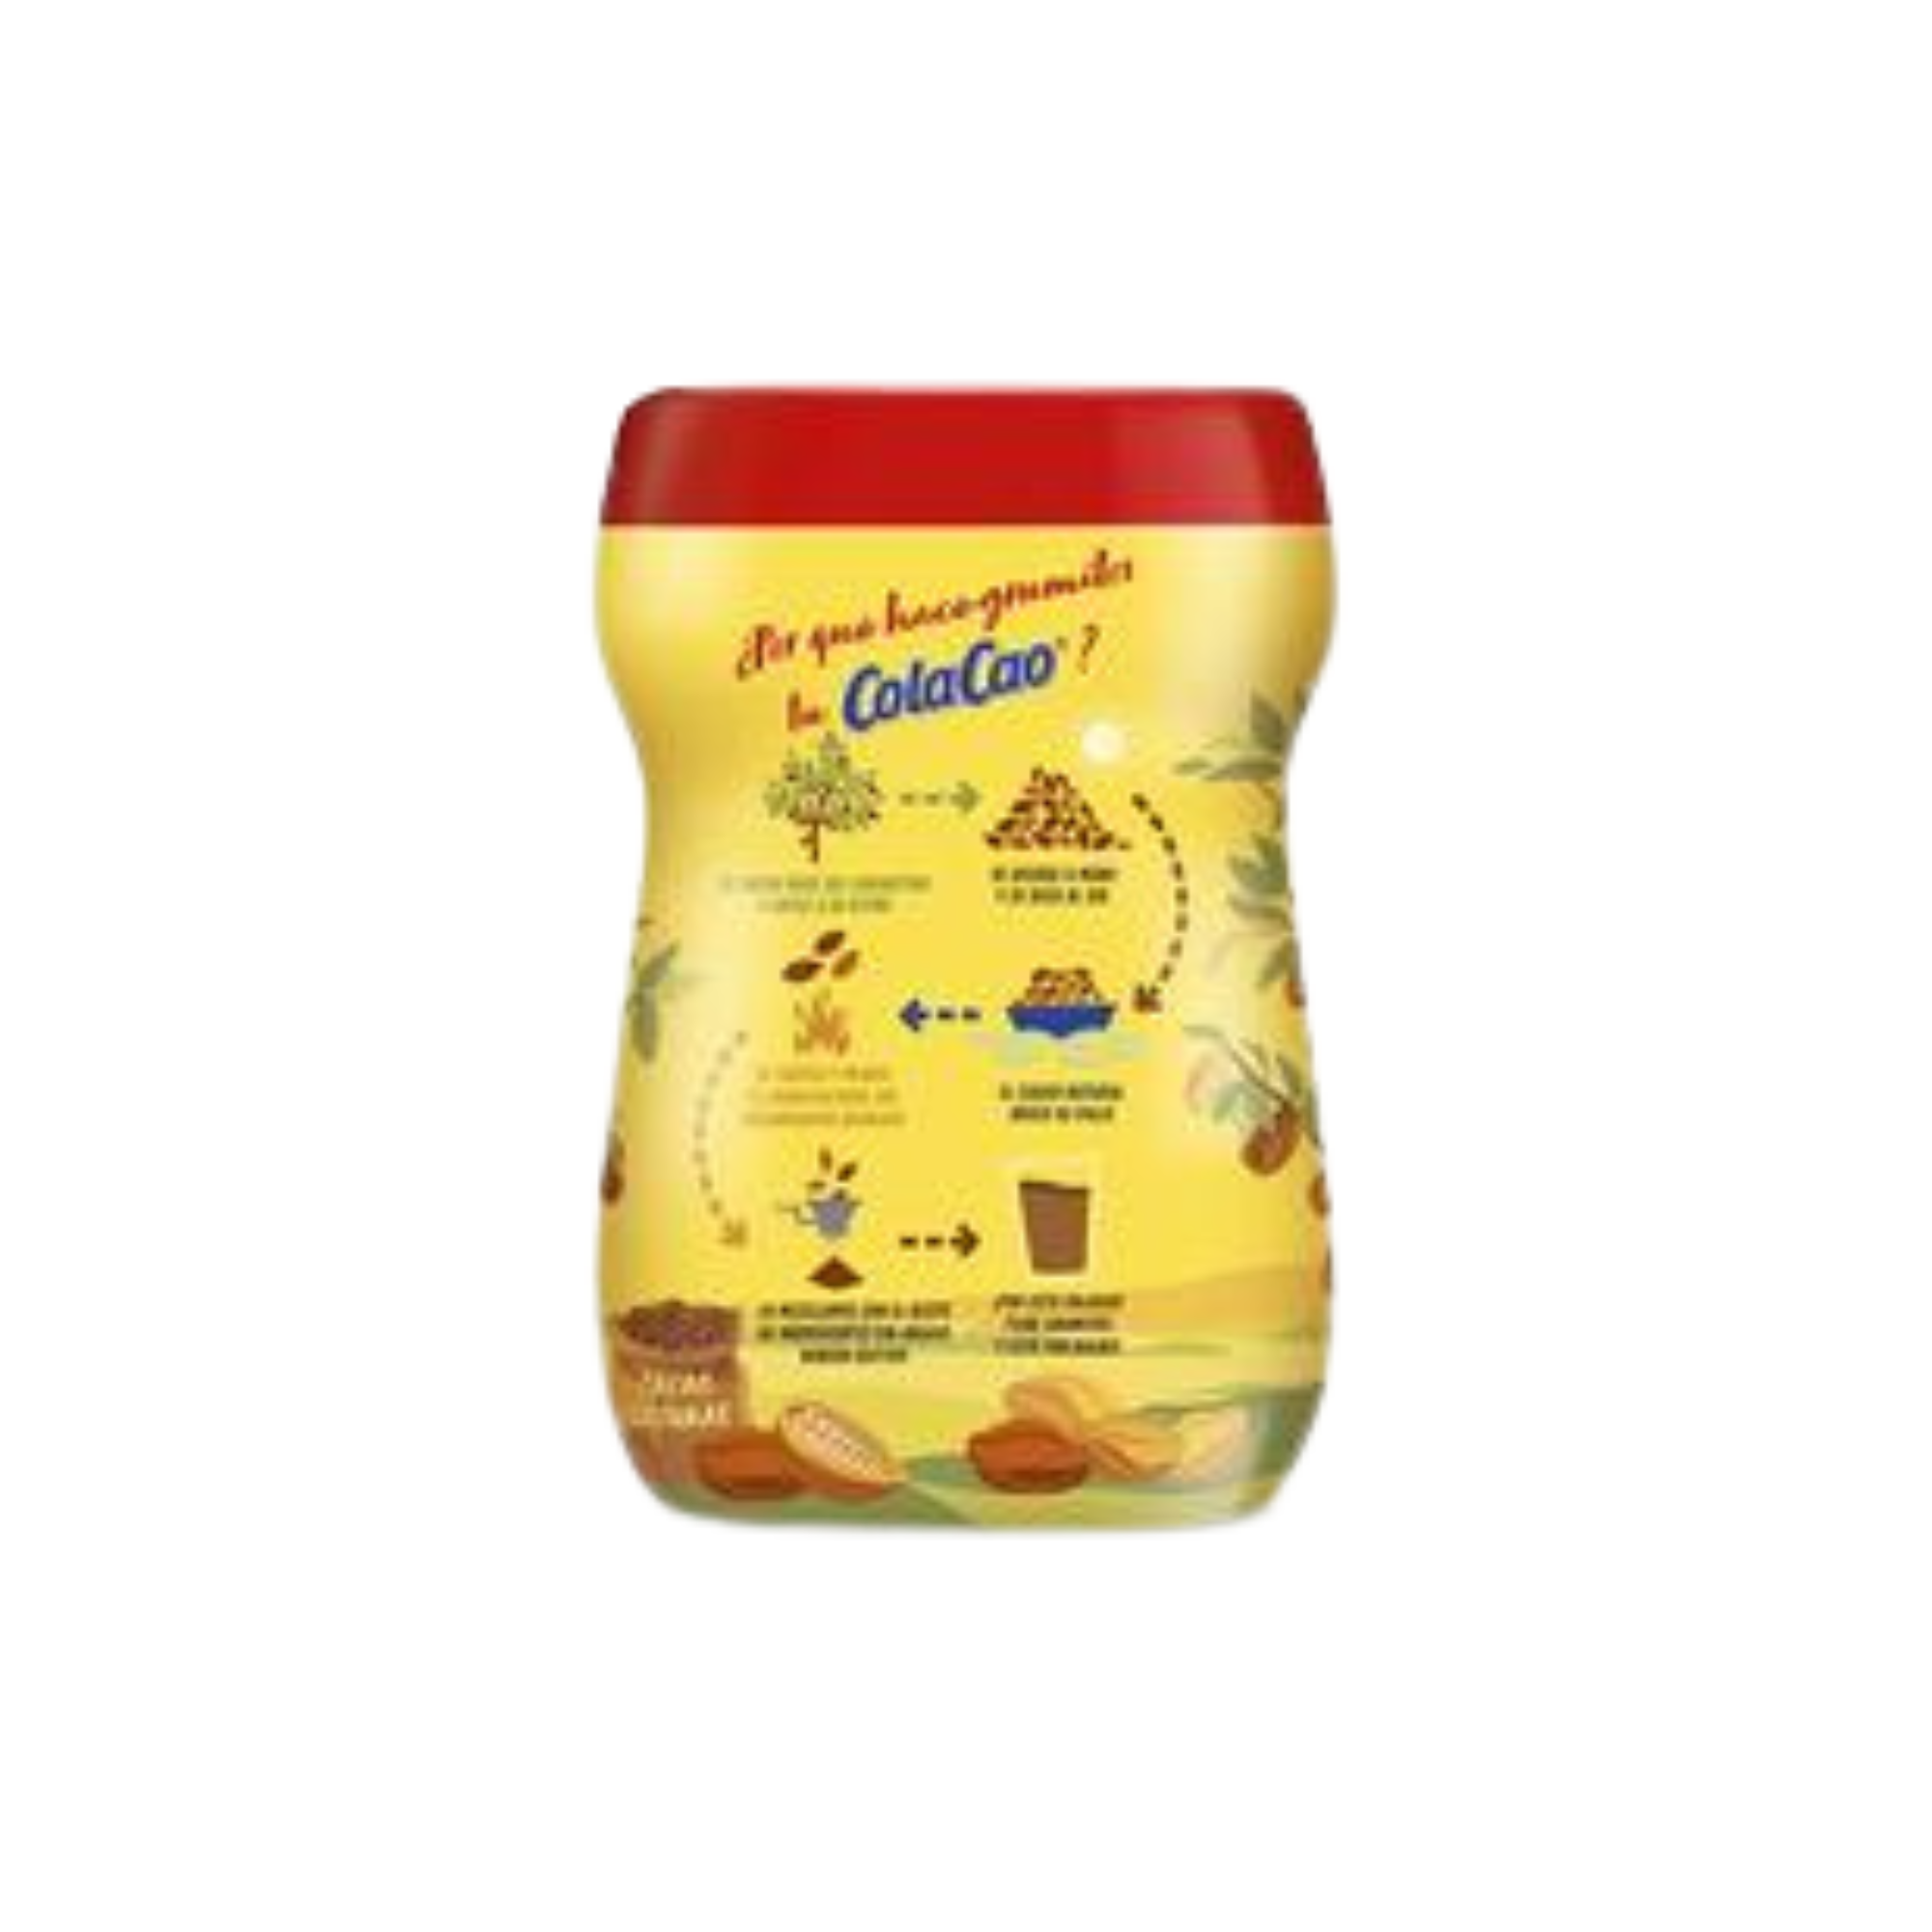 SPANISH COLA CAO ORIGINAL - No ADDITIVES SPANISH HOT CHOCOLATE DRINK 390g